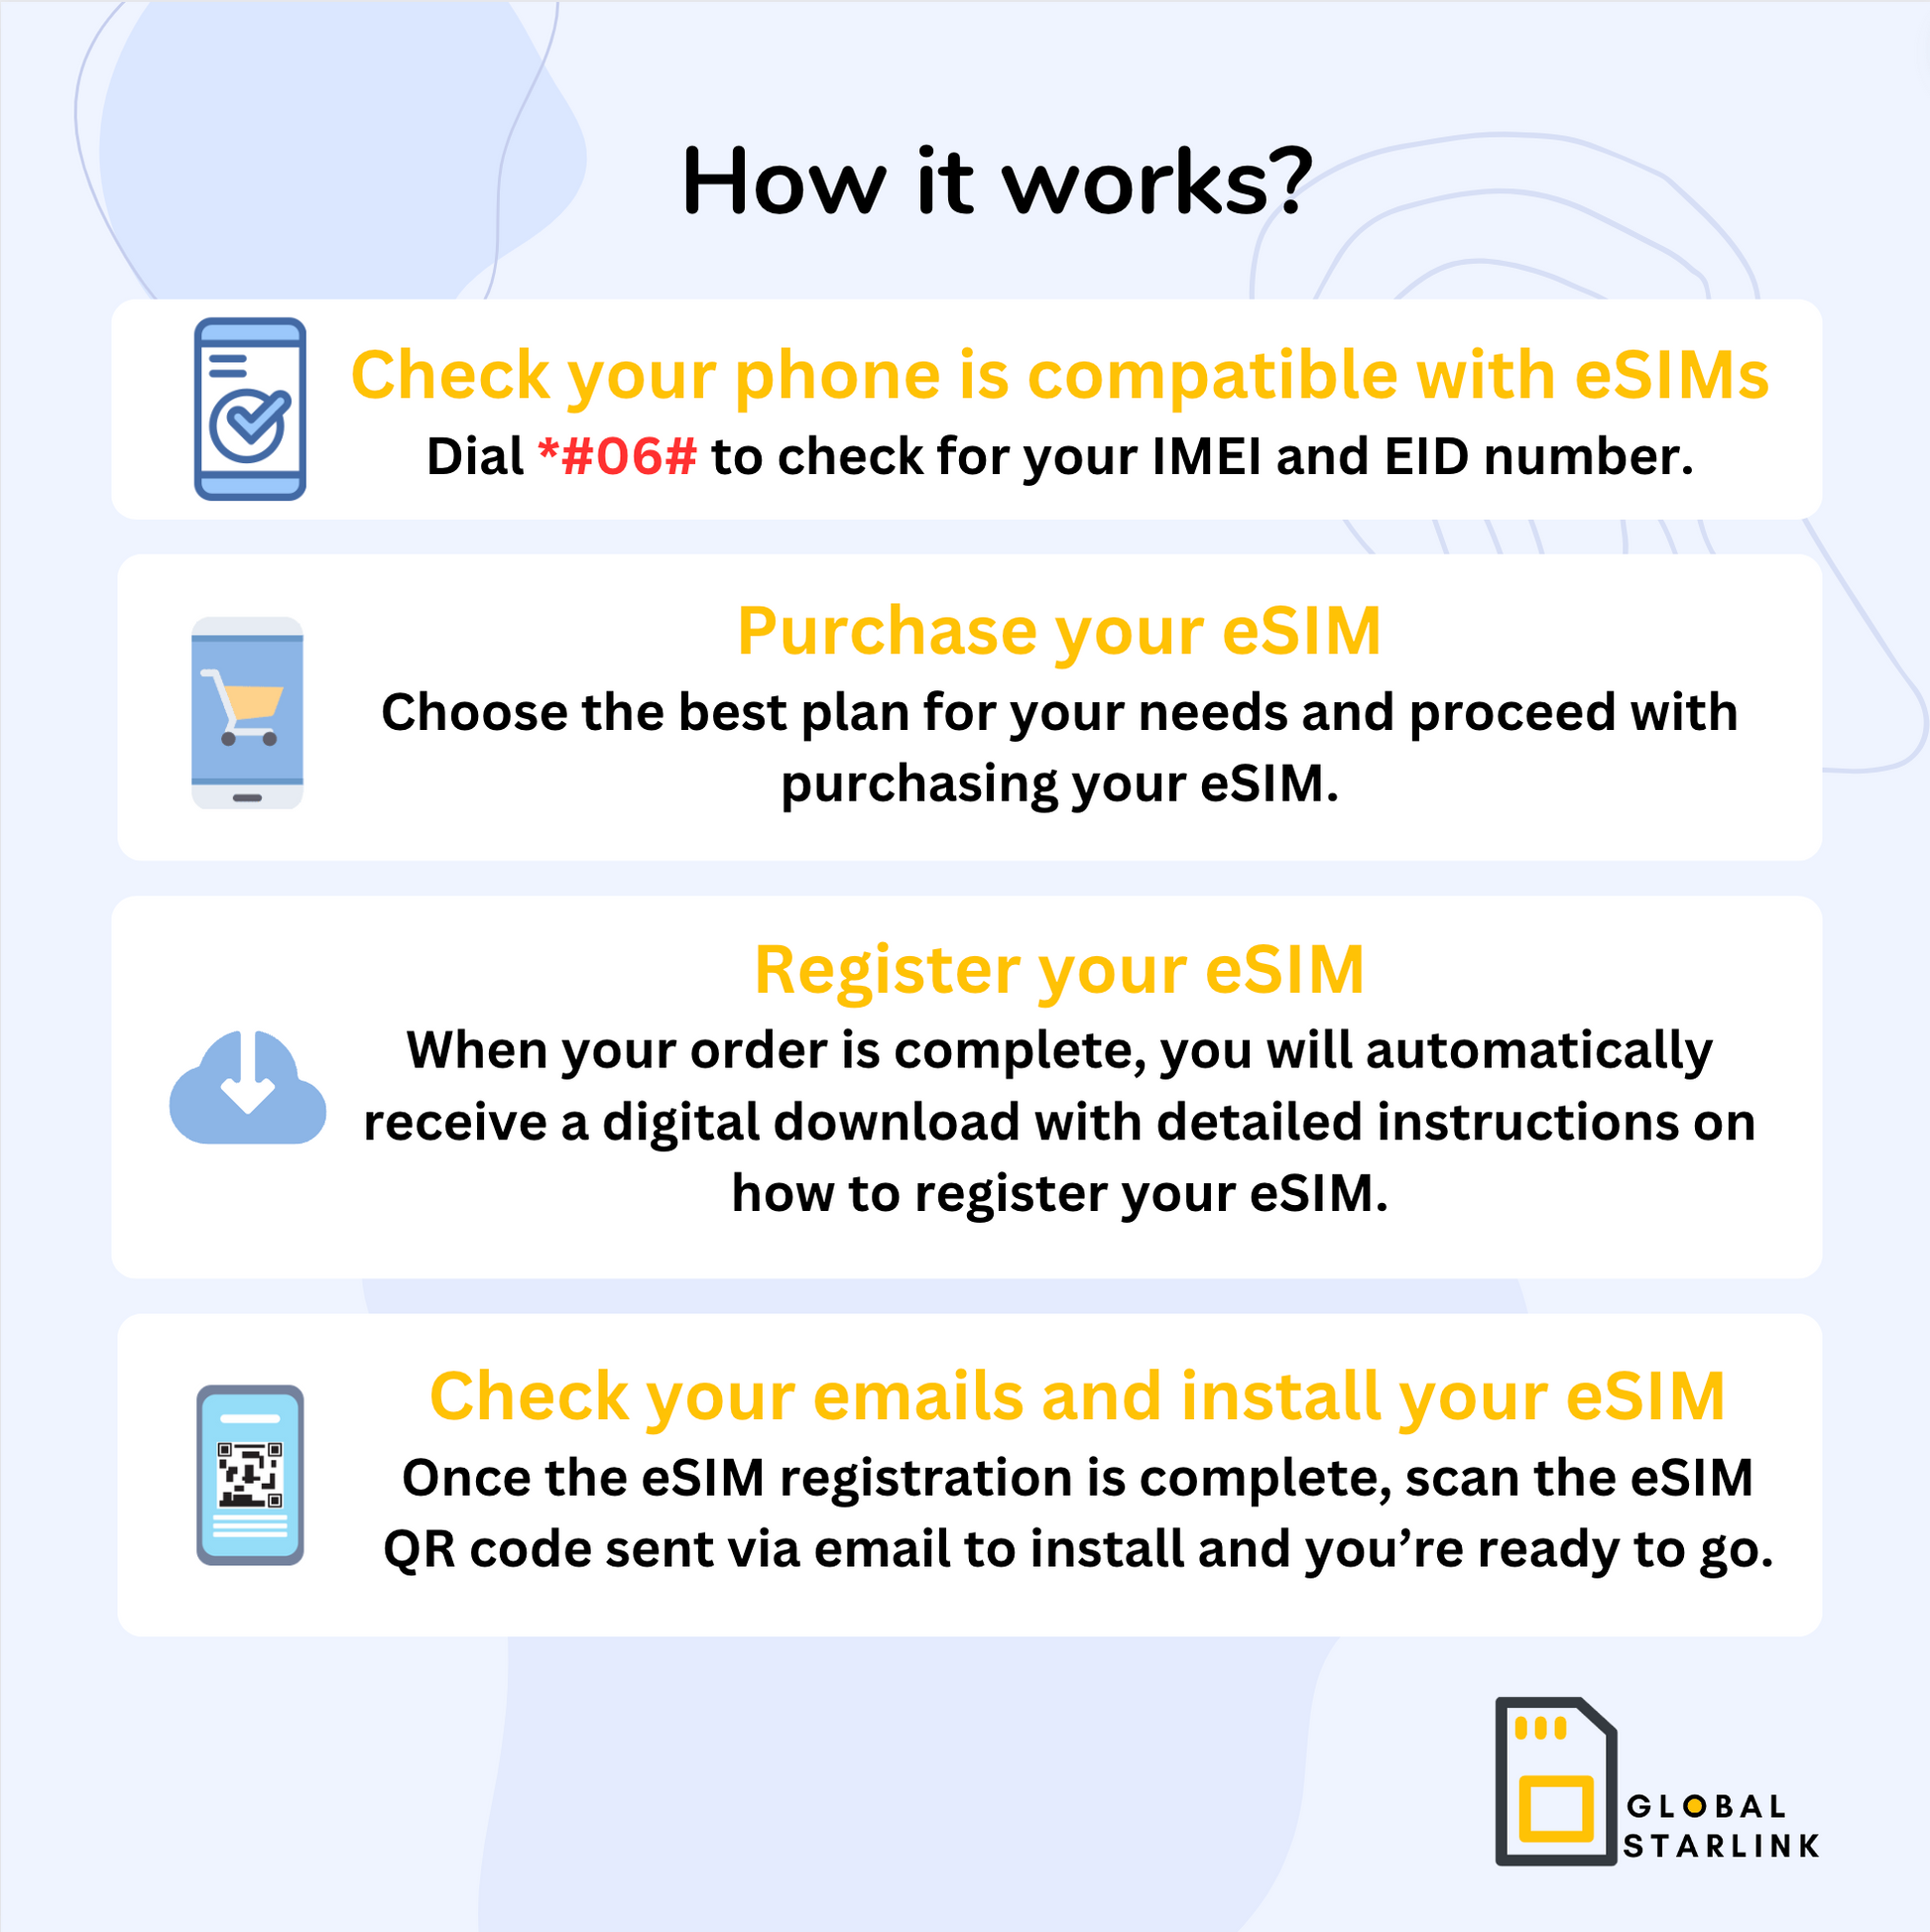 UK & Europe Prepaid Travel eSIM Card 1GB Per Day - Three (Data Only) - G-Starlink